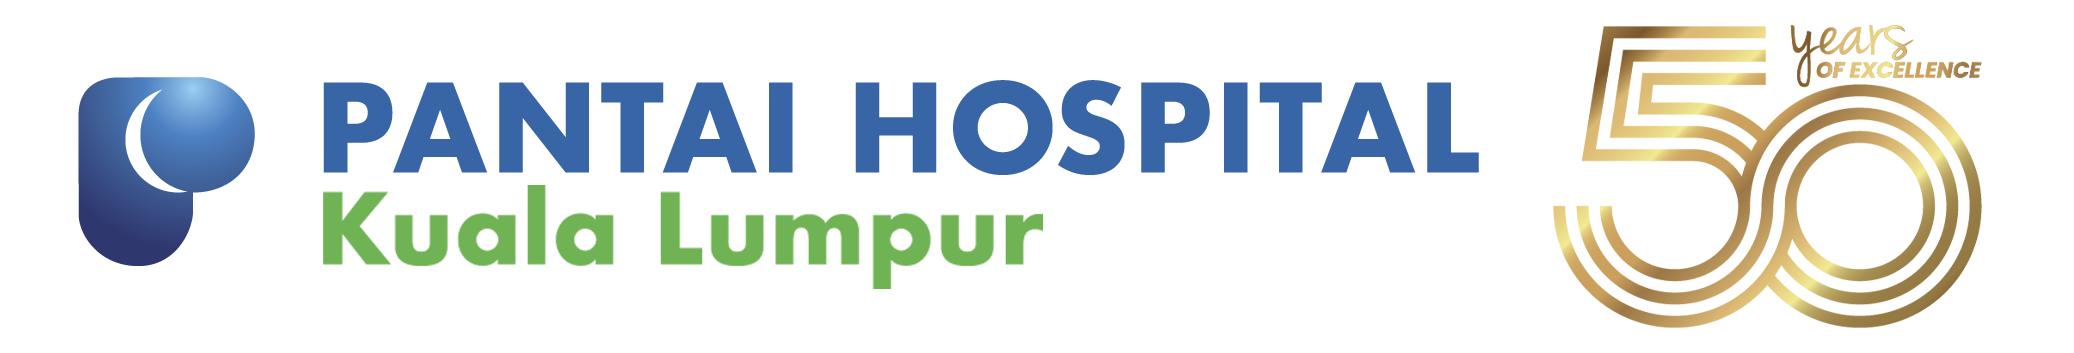 hospital-logo